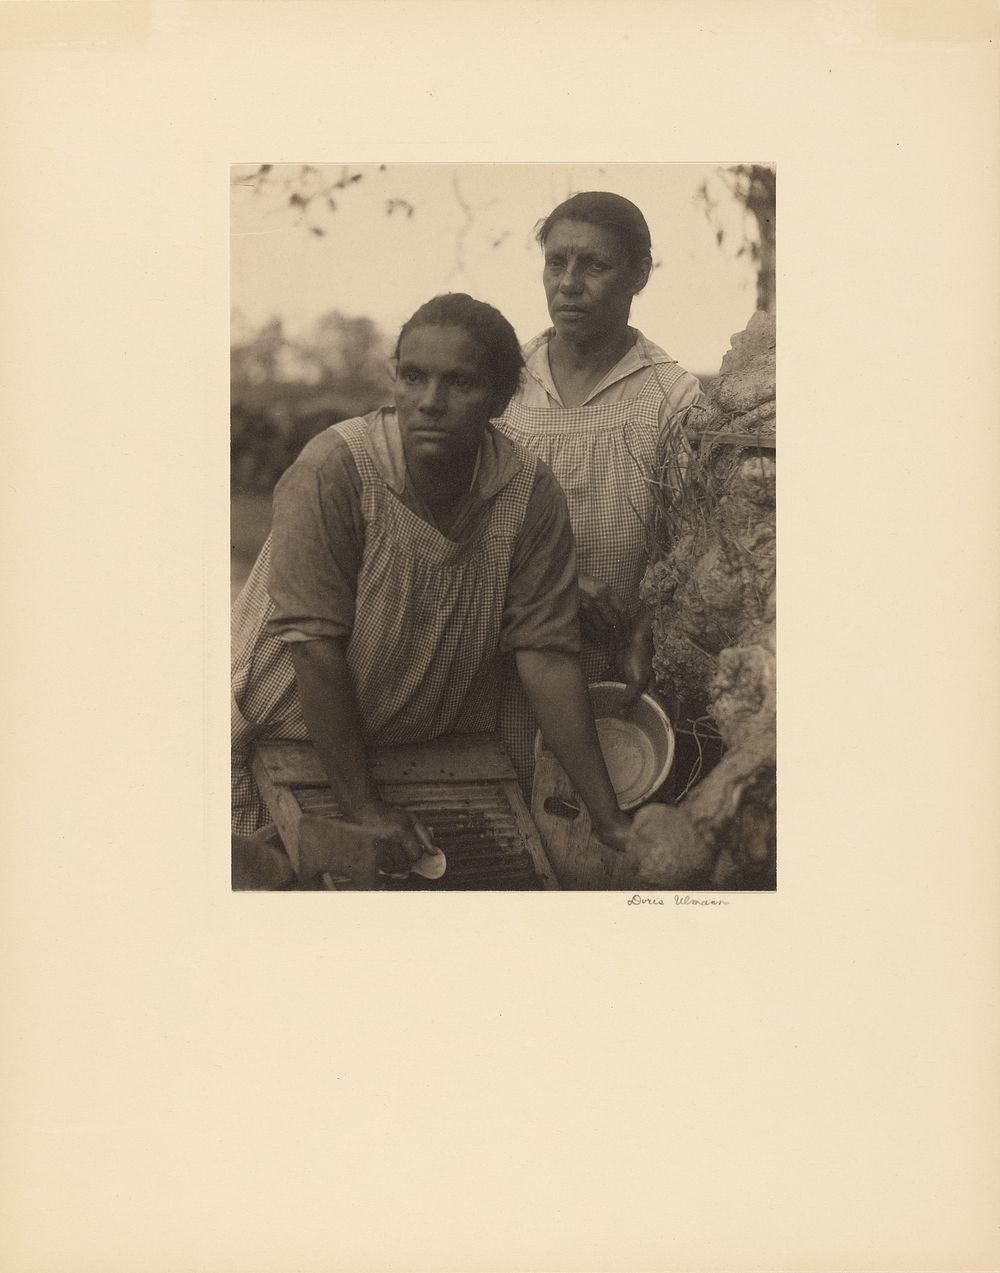 Two Melungeon Women, Bryson City, North Carolina by Doris Ulmann